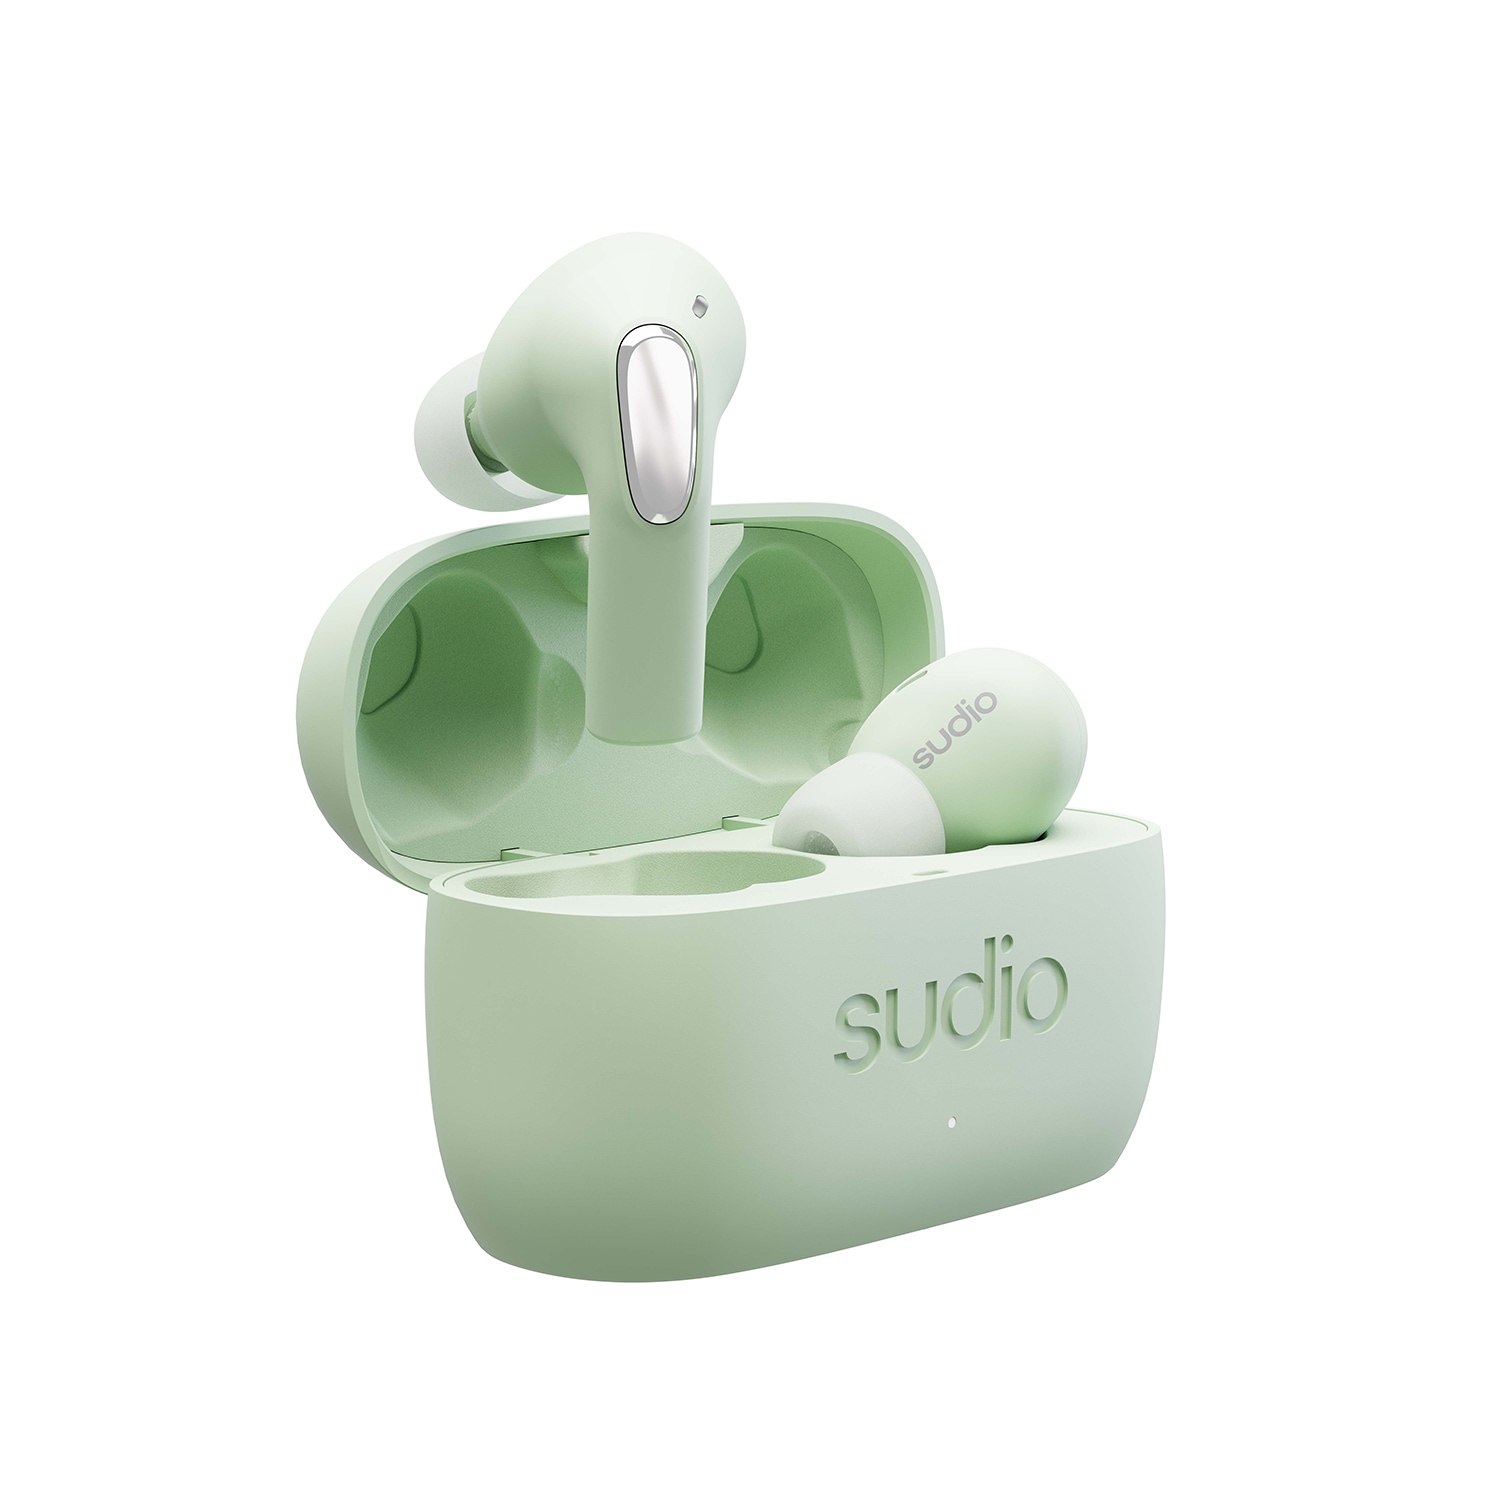 »E2, OTTO jetzt bestellen bei sudio In-Ear-Kopfhörer Bluetooth Kopfhörer« kabelloser In-Ear